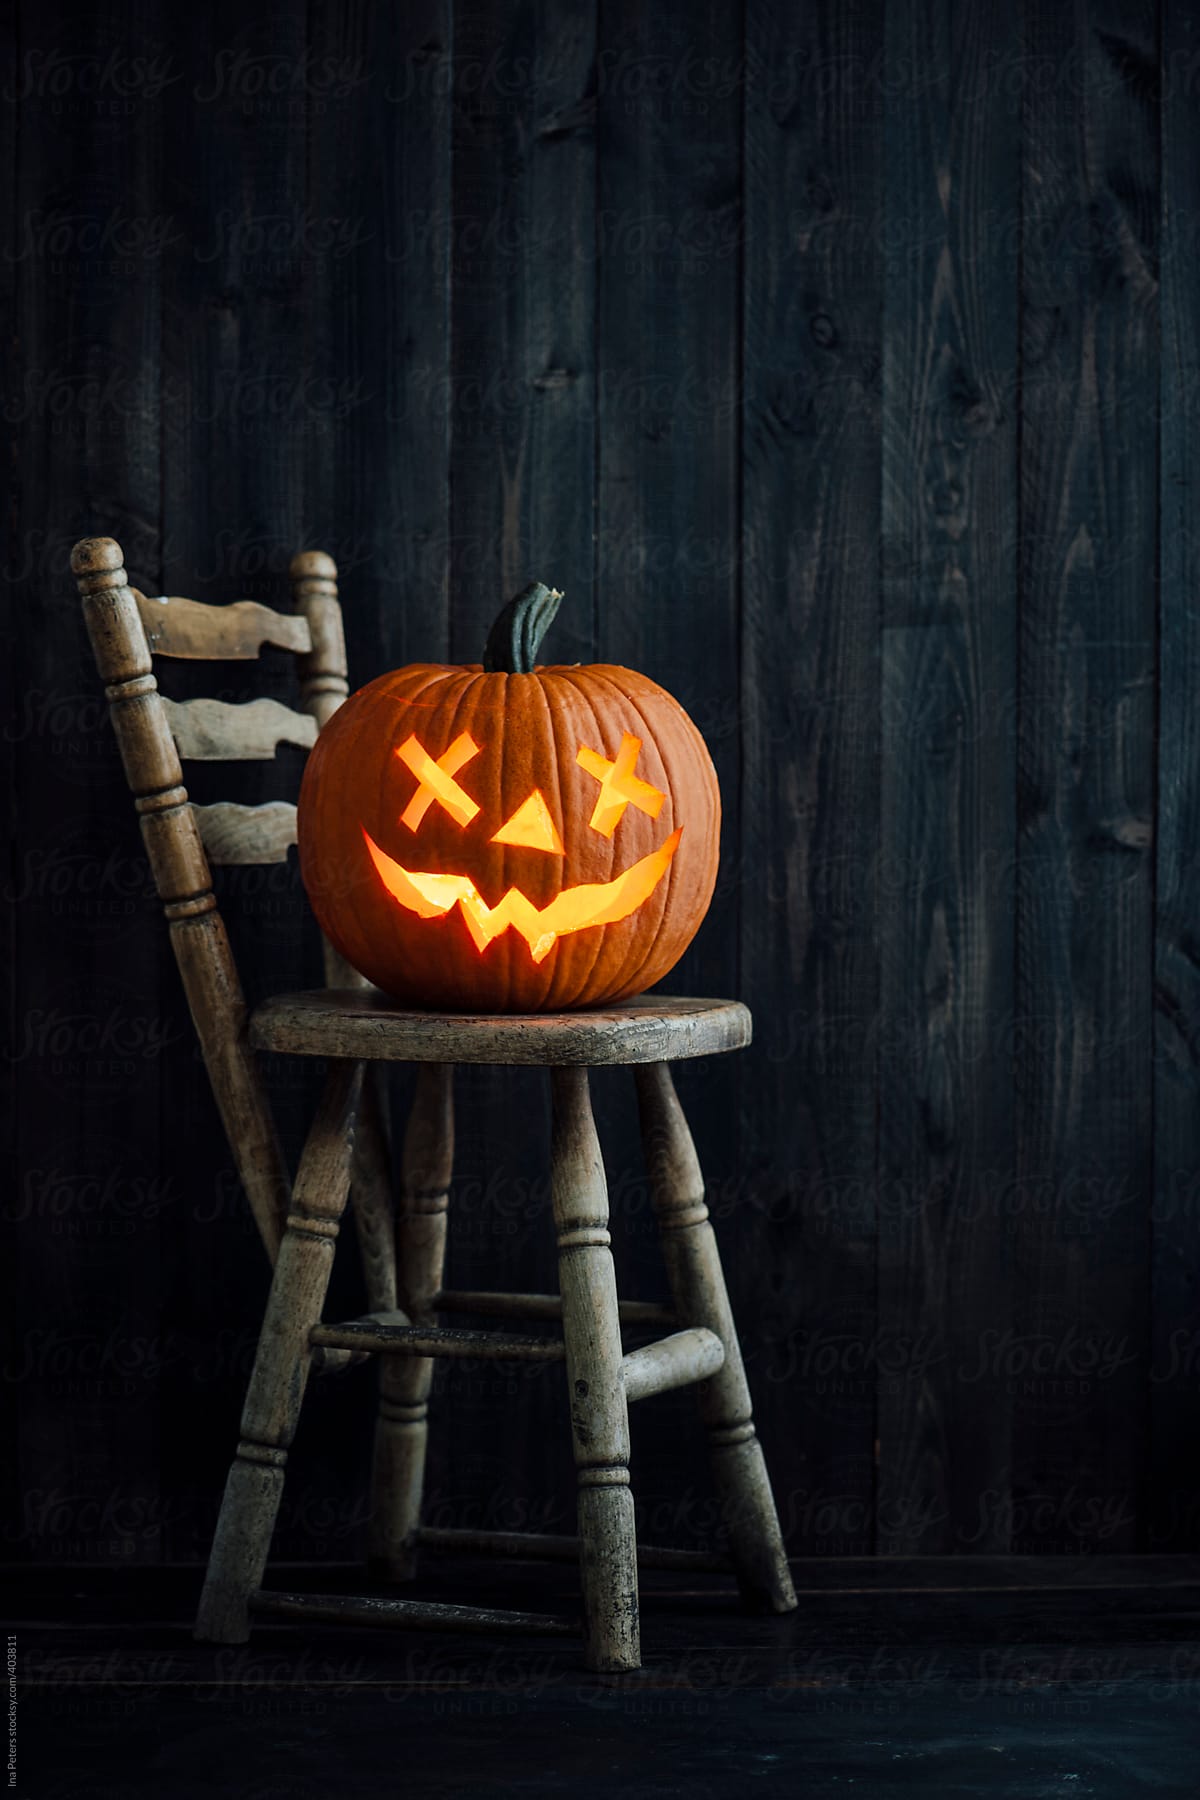 Objects: Halloween Jack-O-Lantern Pumpkin on a chair